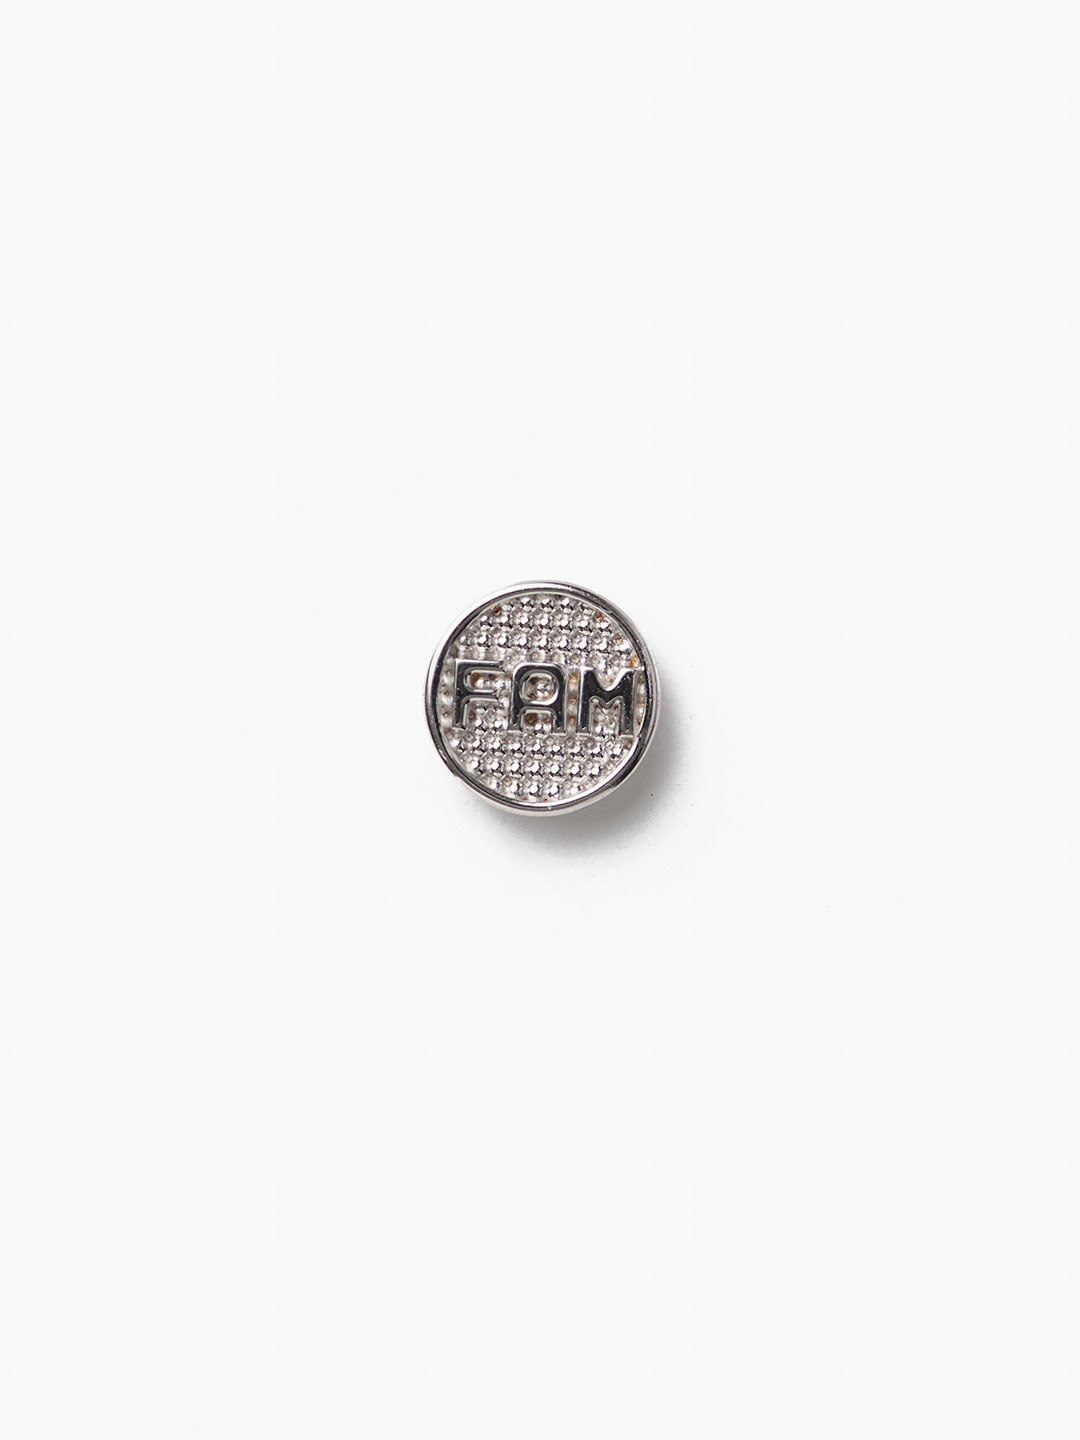 Fam Coin Silver - Silver